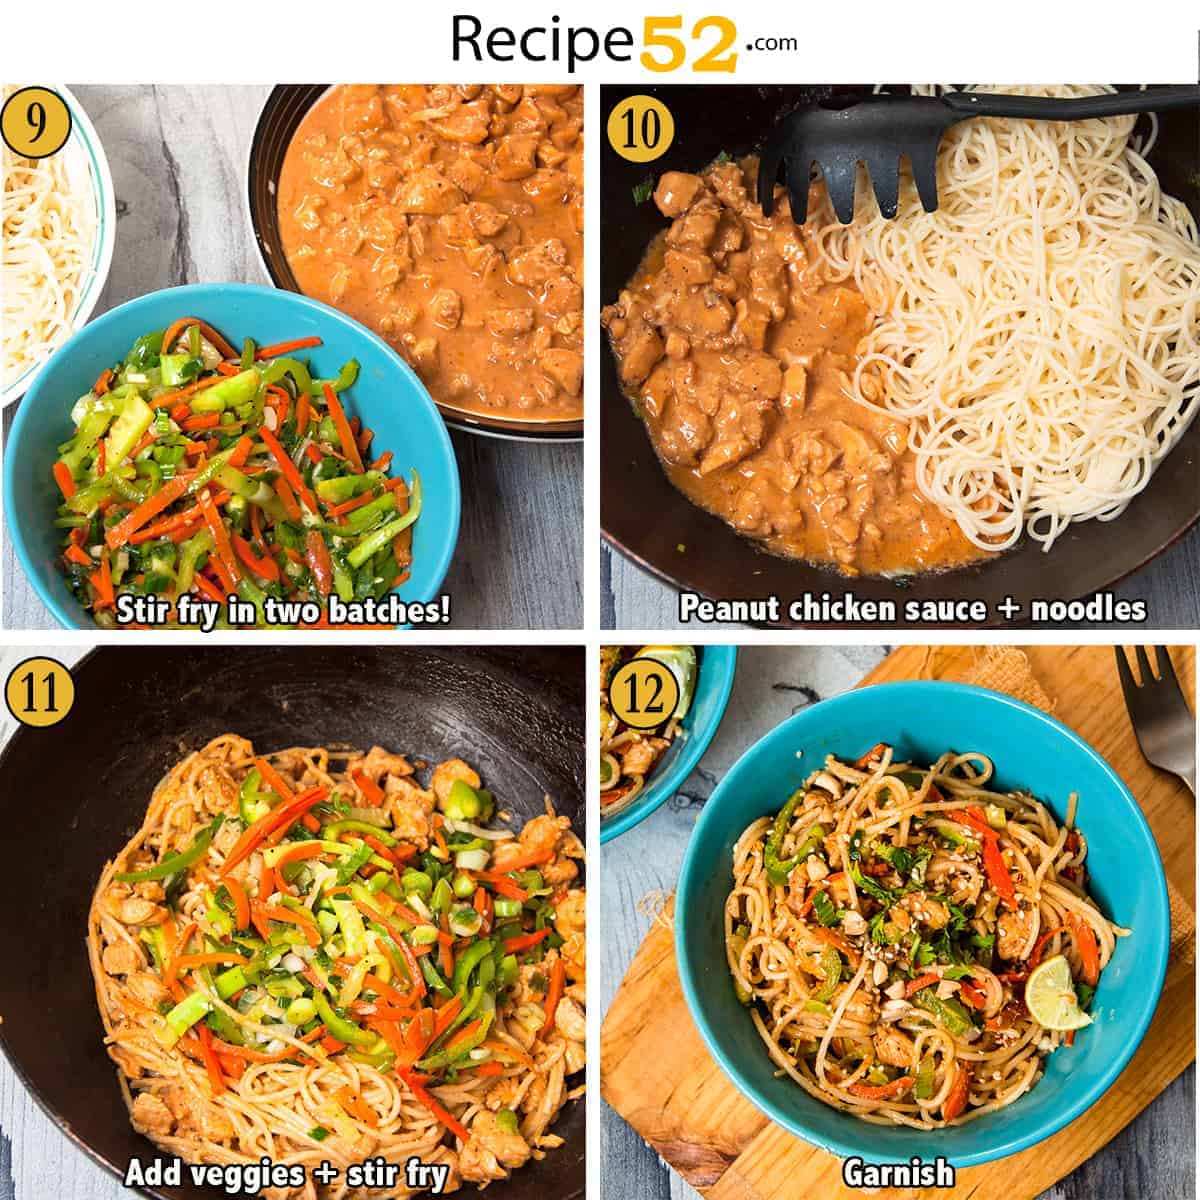 Steps to stir fry veggies and prepare noodles.